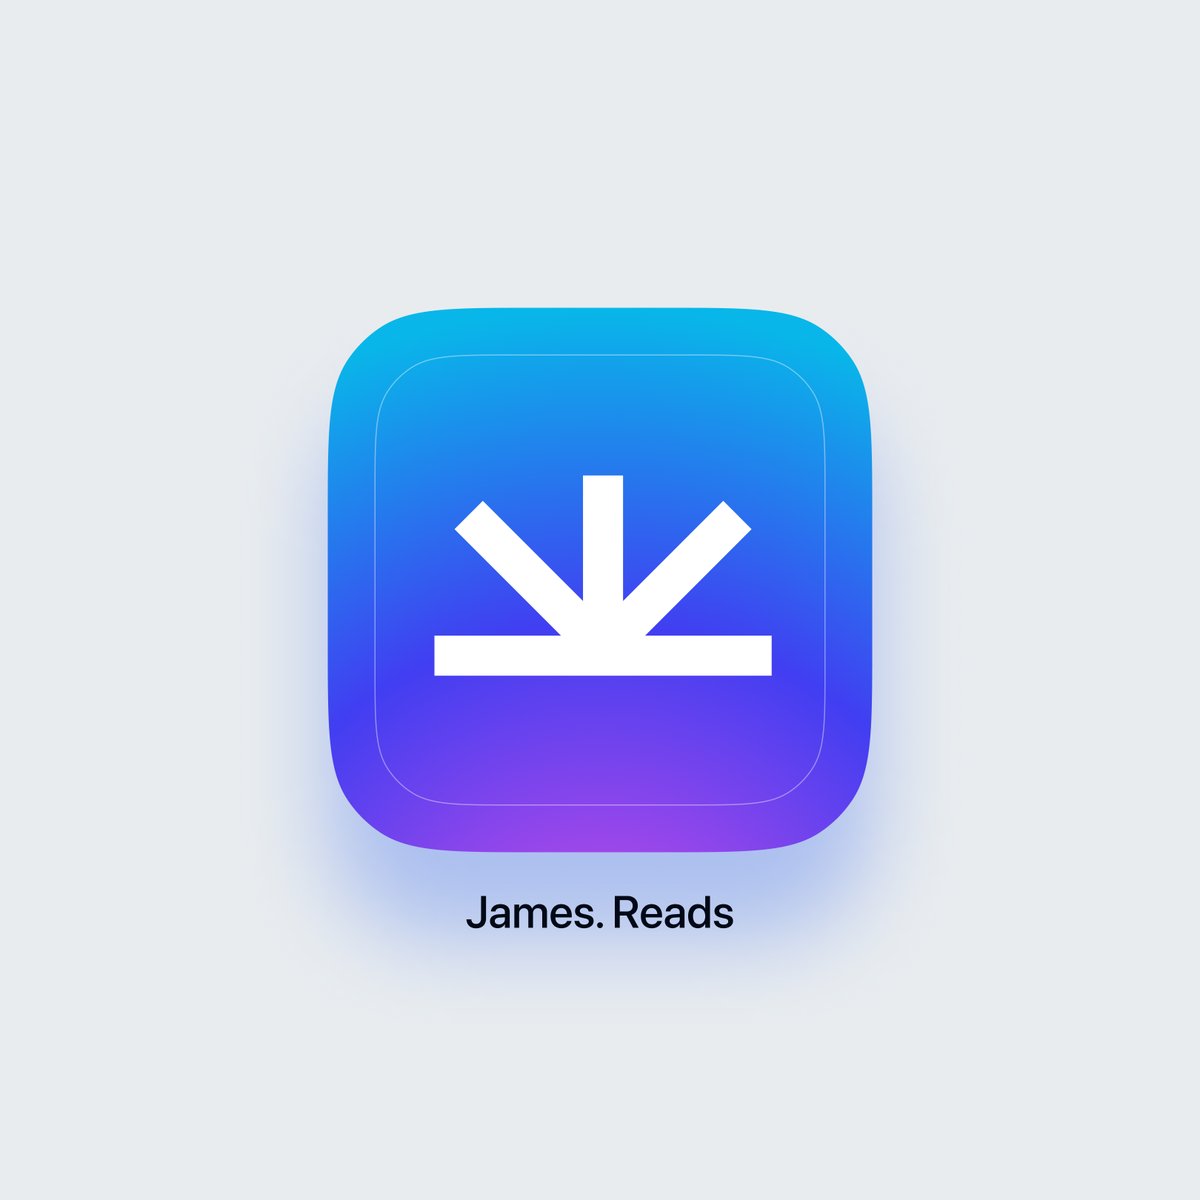 006
I designed an app logo for james.reads 
#100daysUI